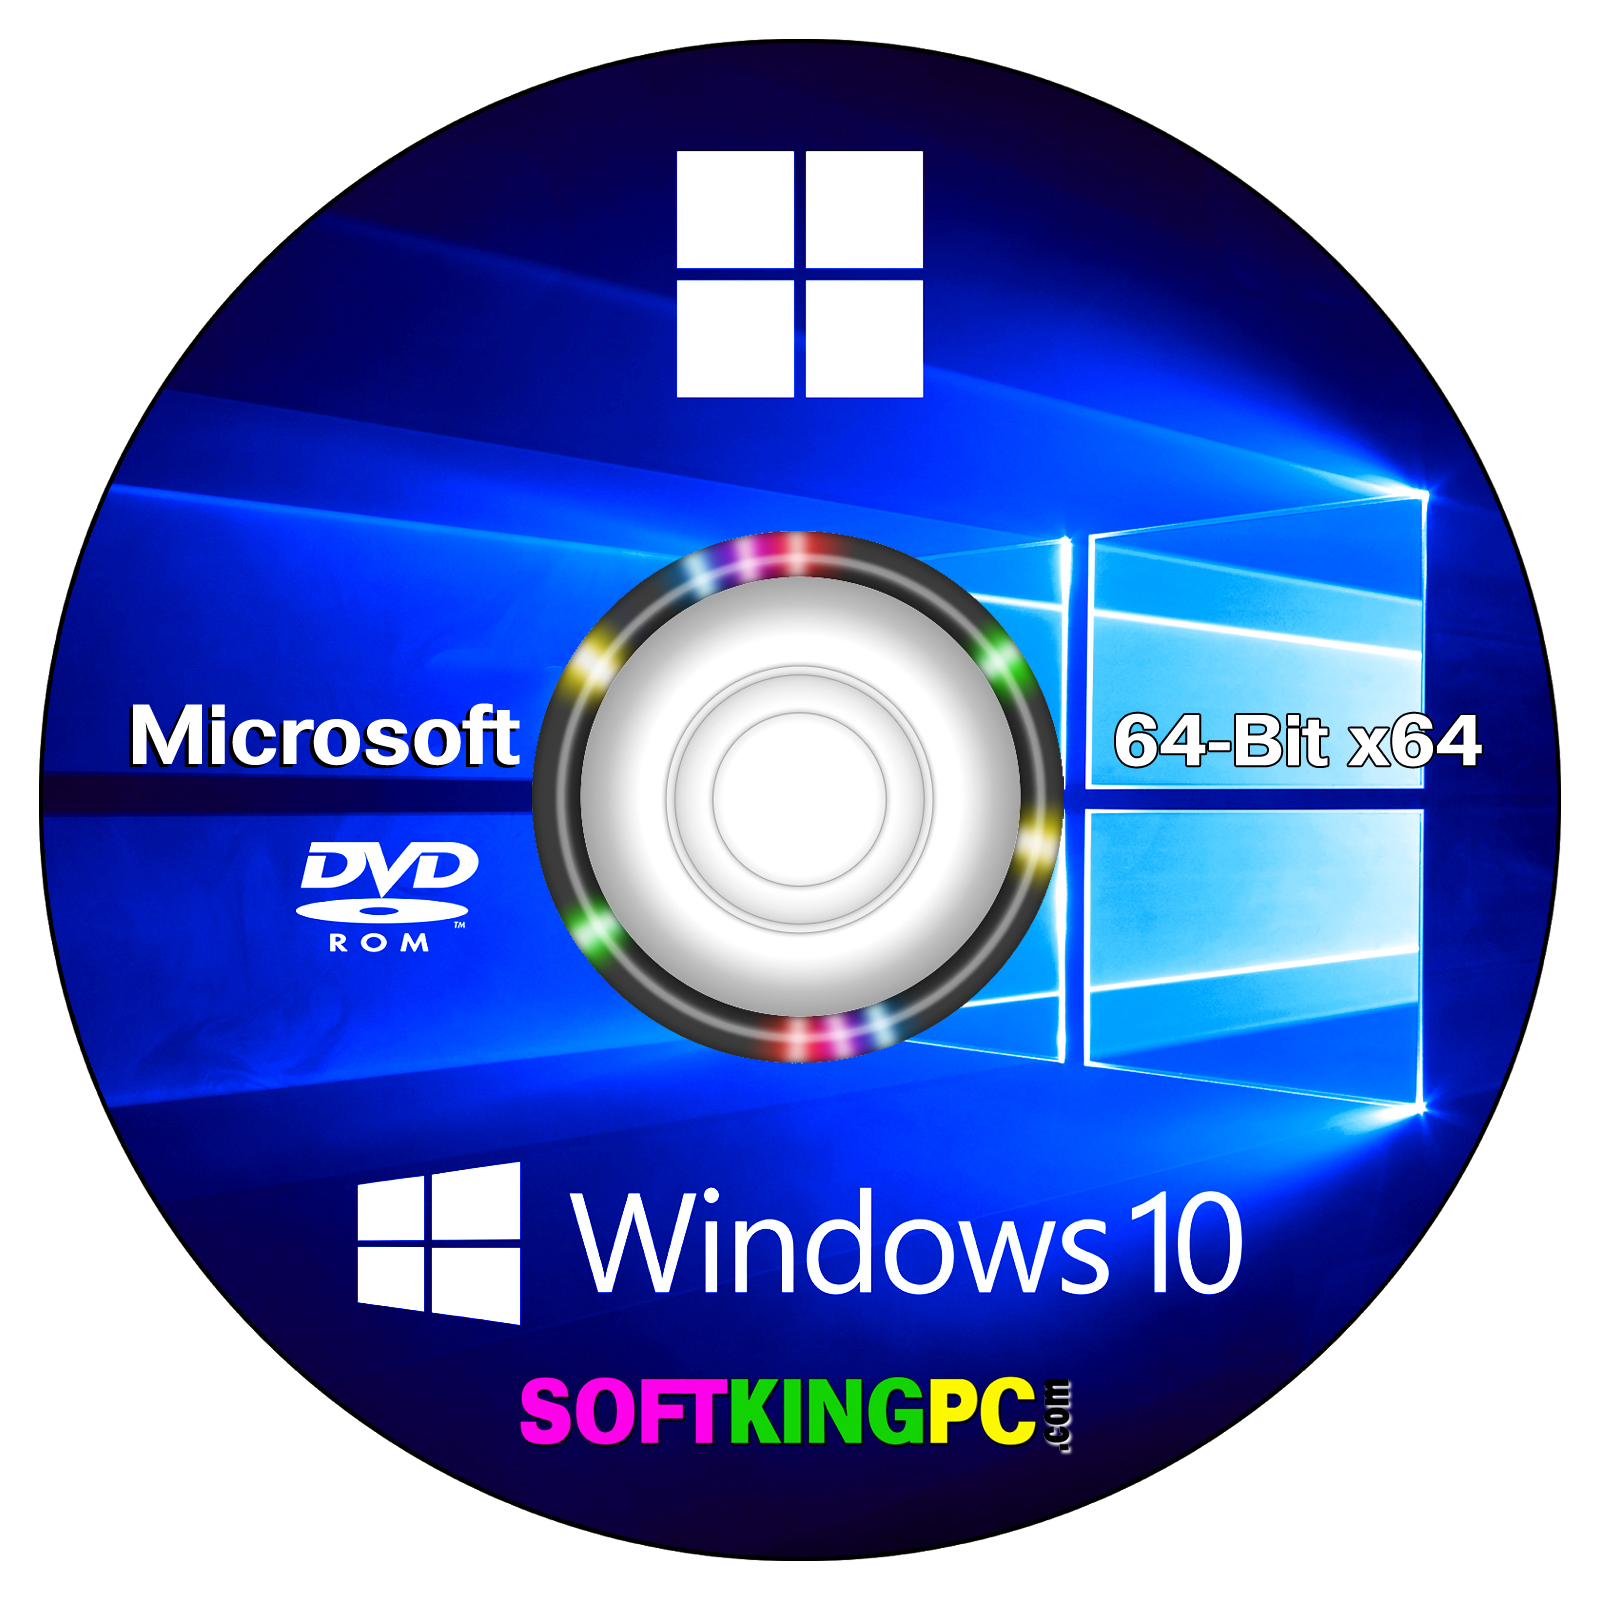 windows 10 anniversary iso download 64 bit